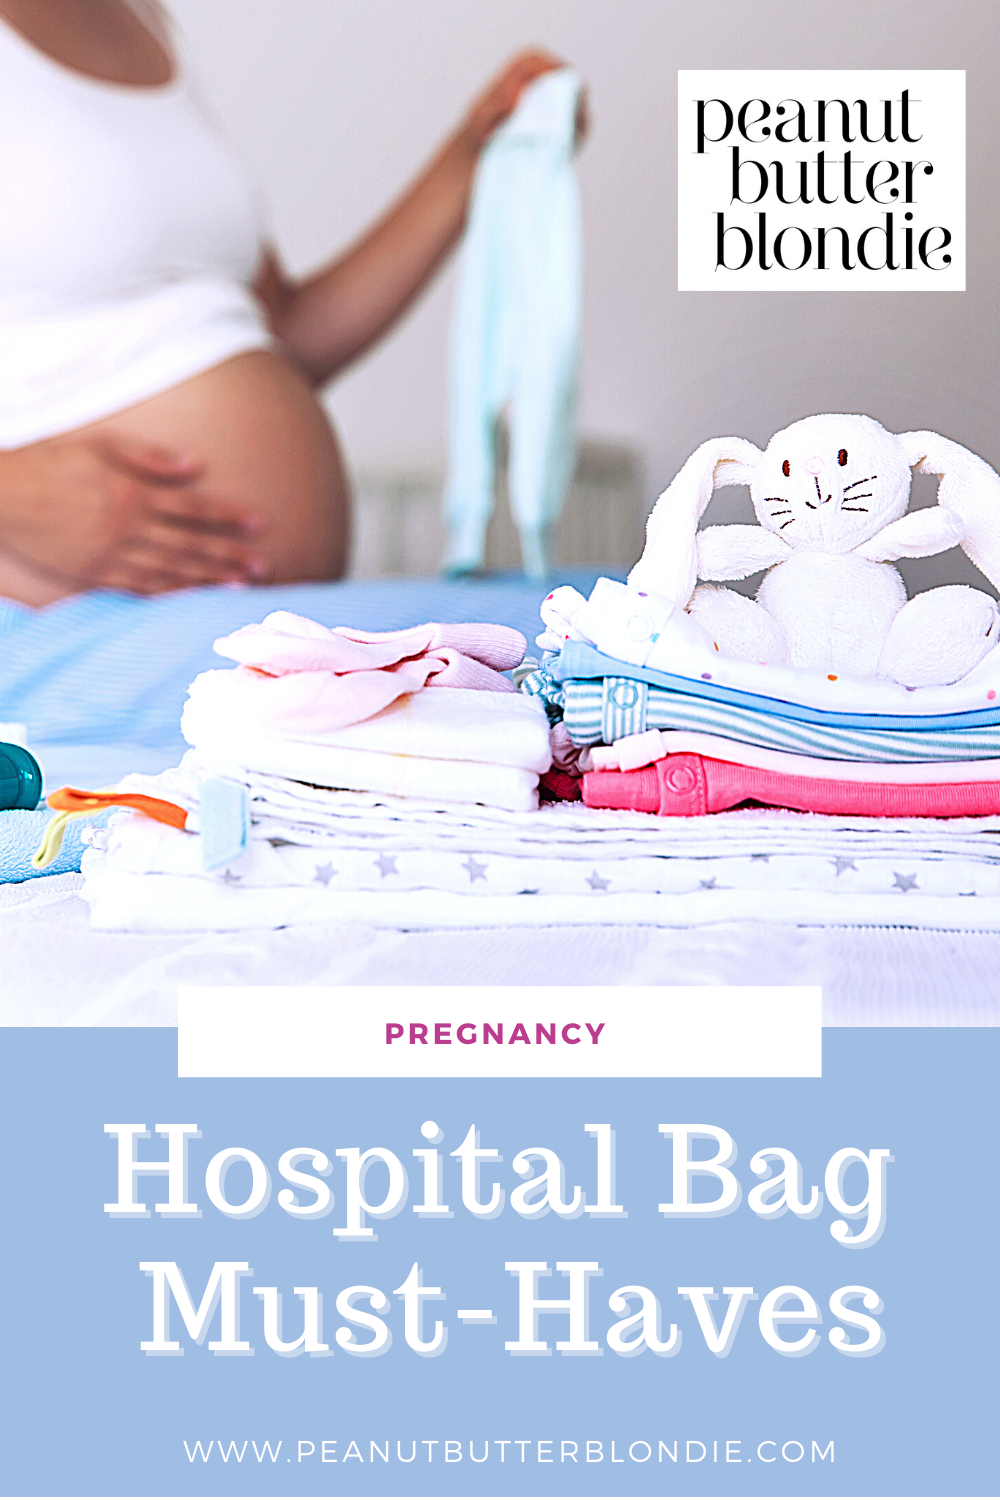 Baby Shower Gift: Hospital Essentials Bag - Peanut Butter Fingers